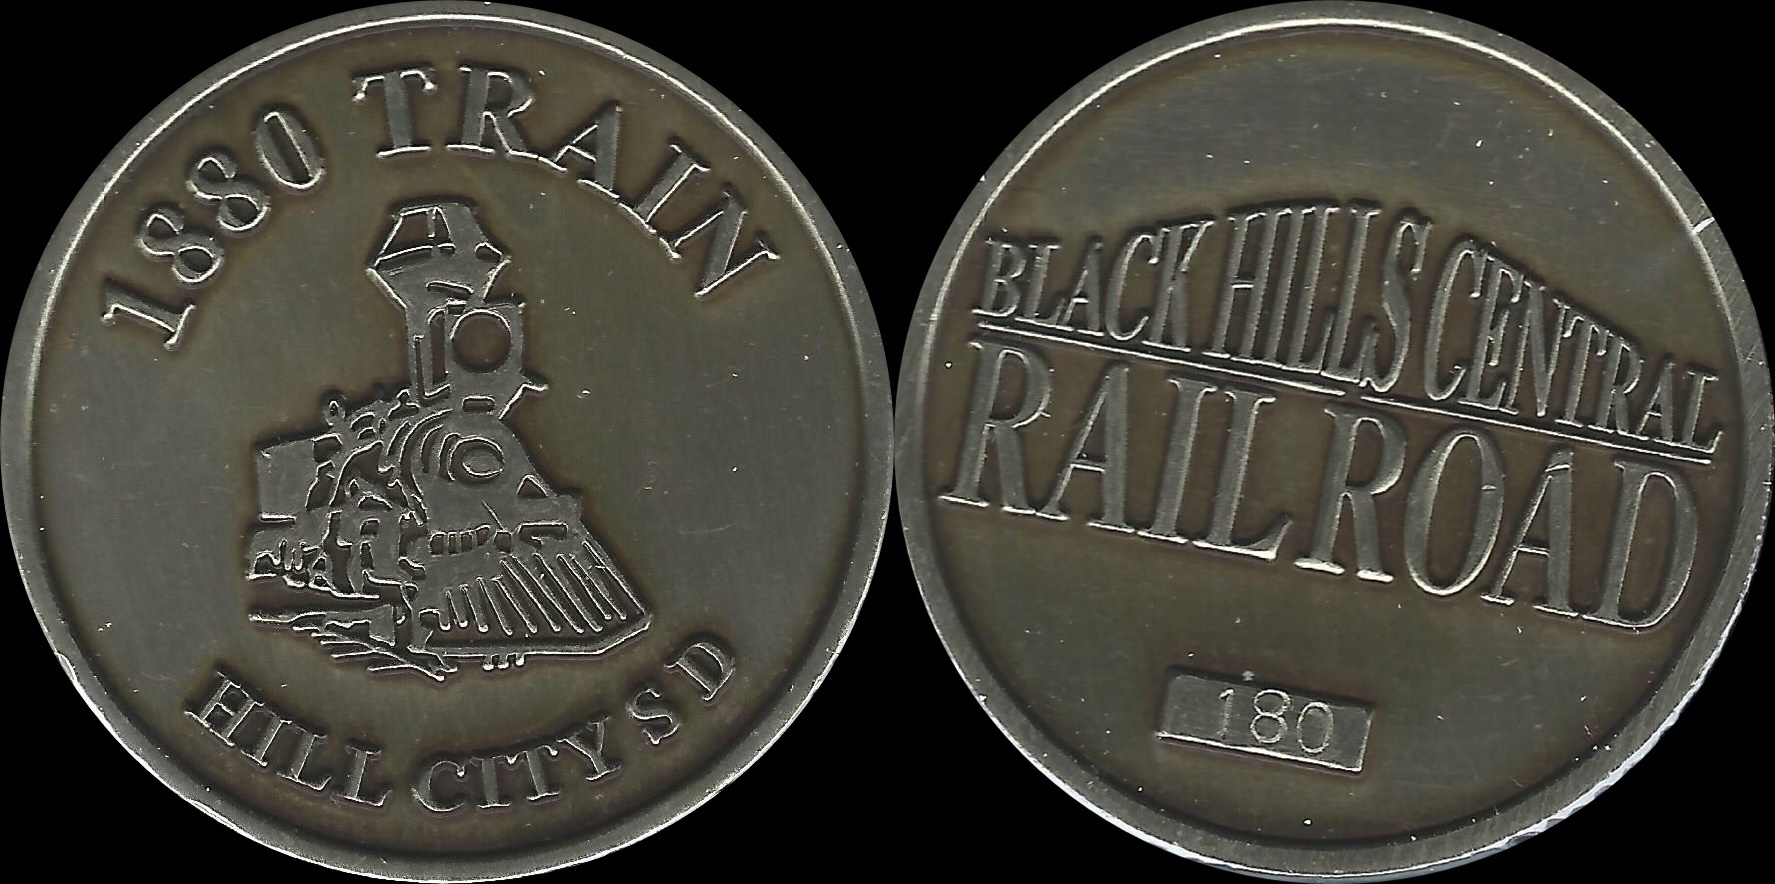 Black Hills Central Railroad 1a-horz.jpg